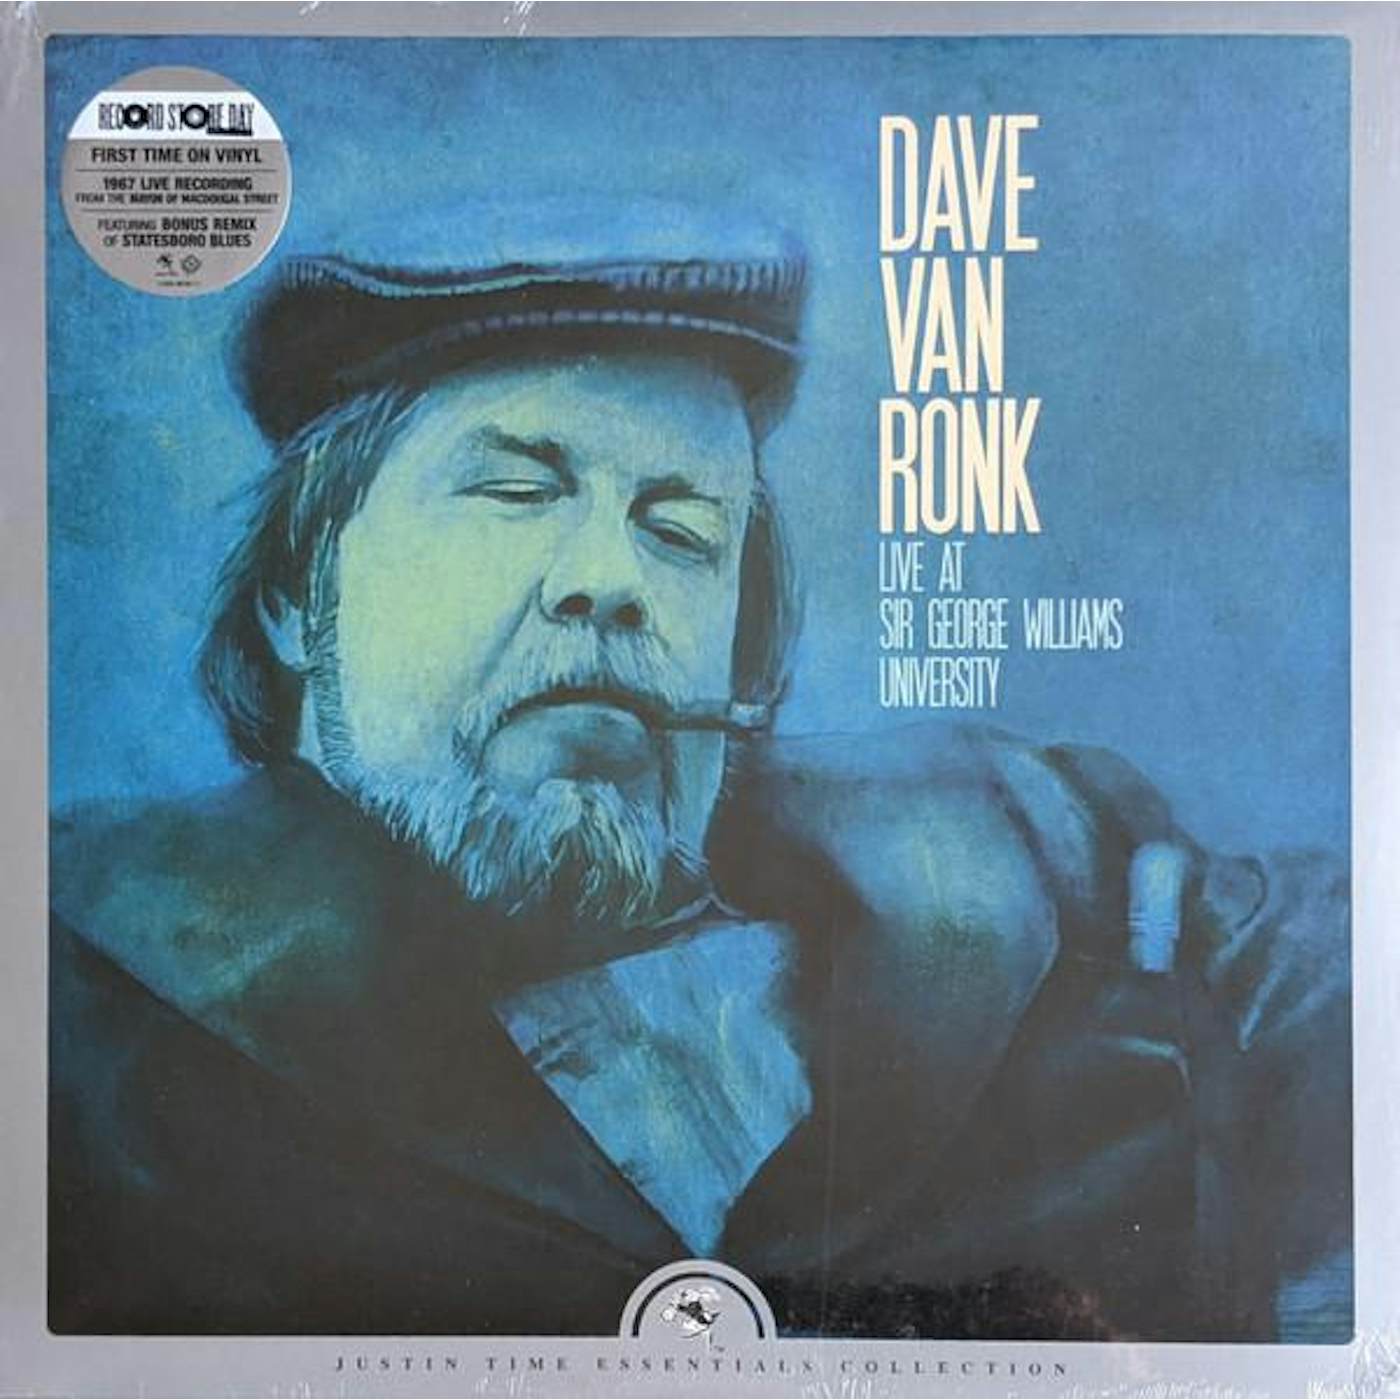 Dave Van Ronk LIVE AT SIR GEORGE WILLIAMS UNIVERSITY (150G) Vinyl Record